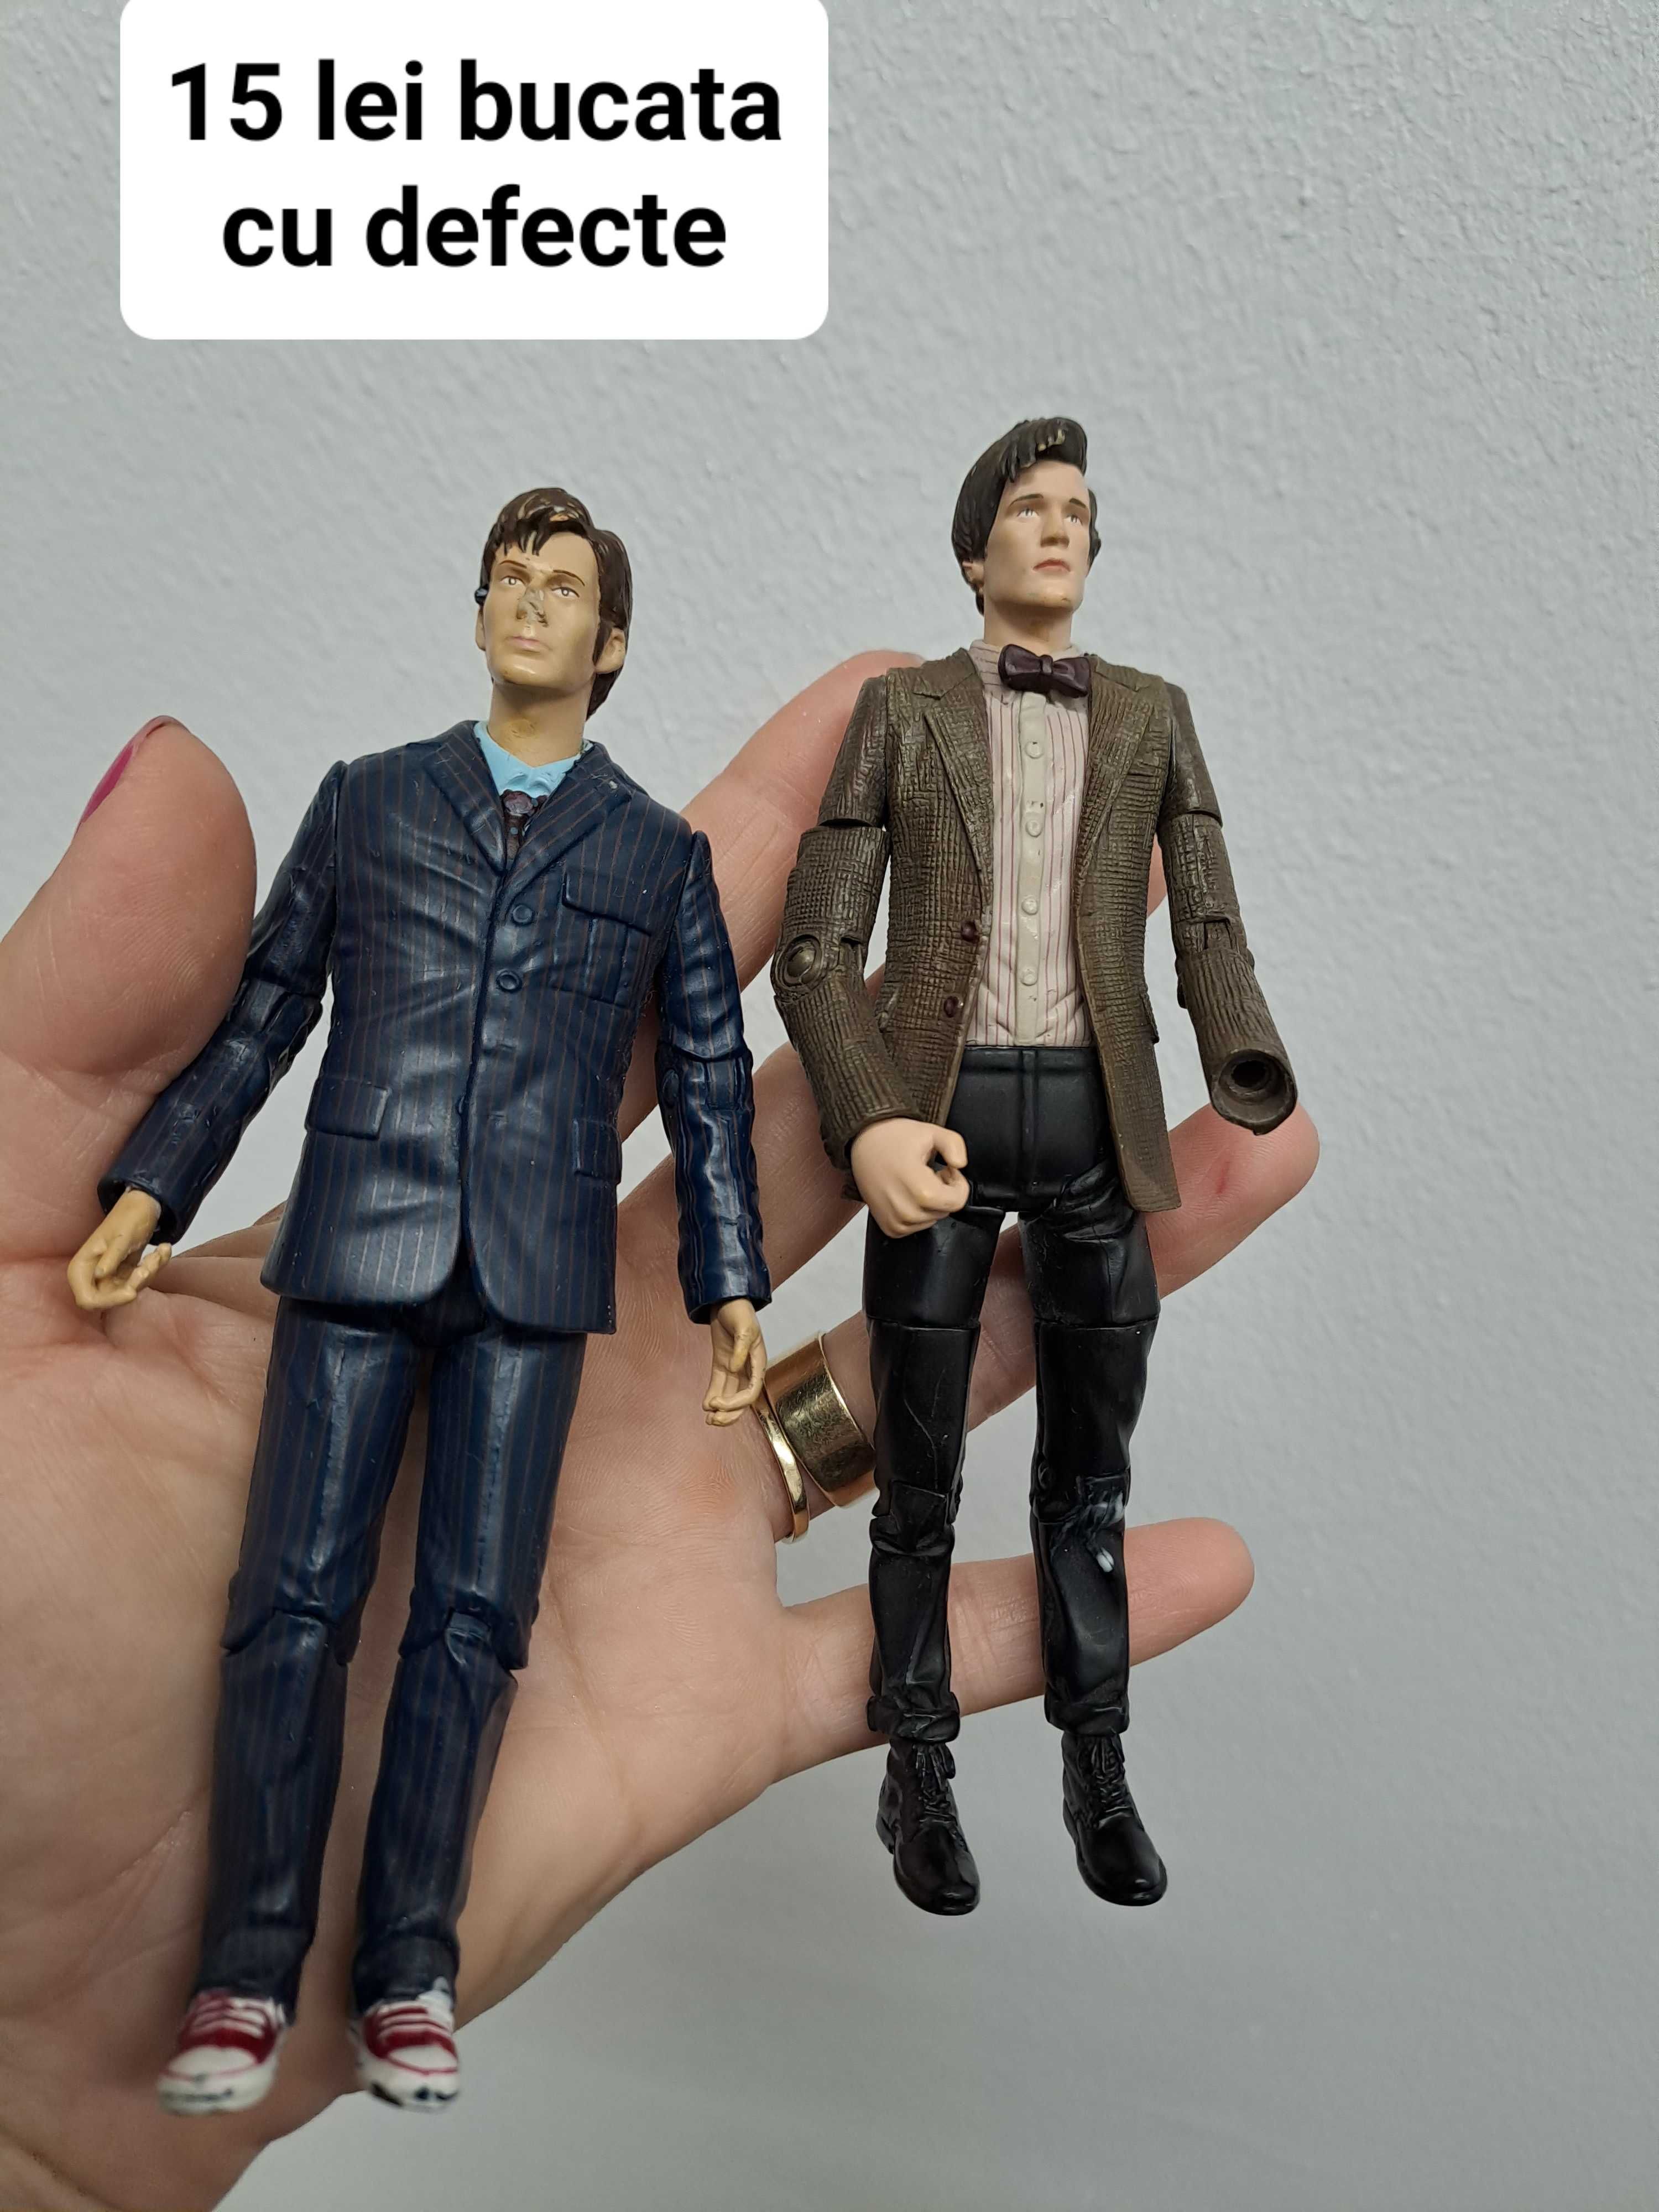 Figurine originale Dr. Who